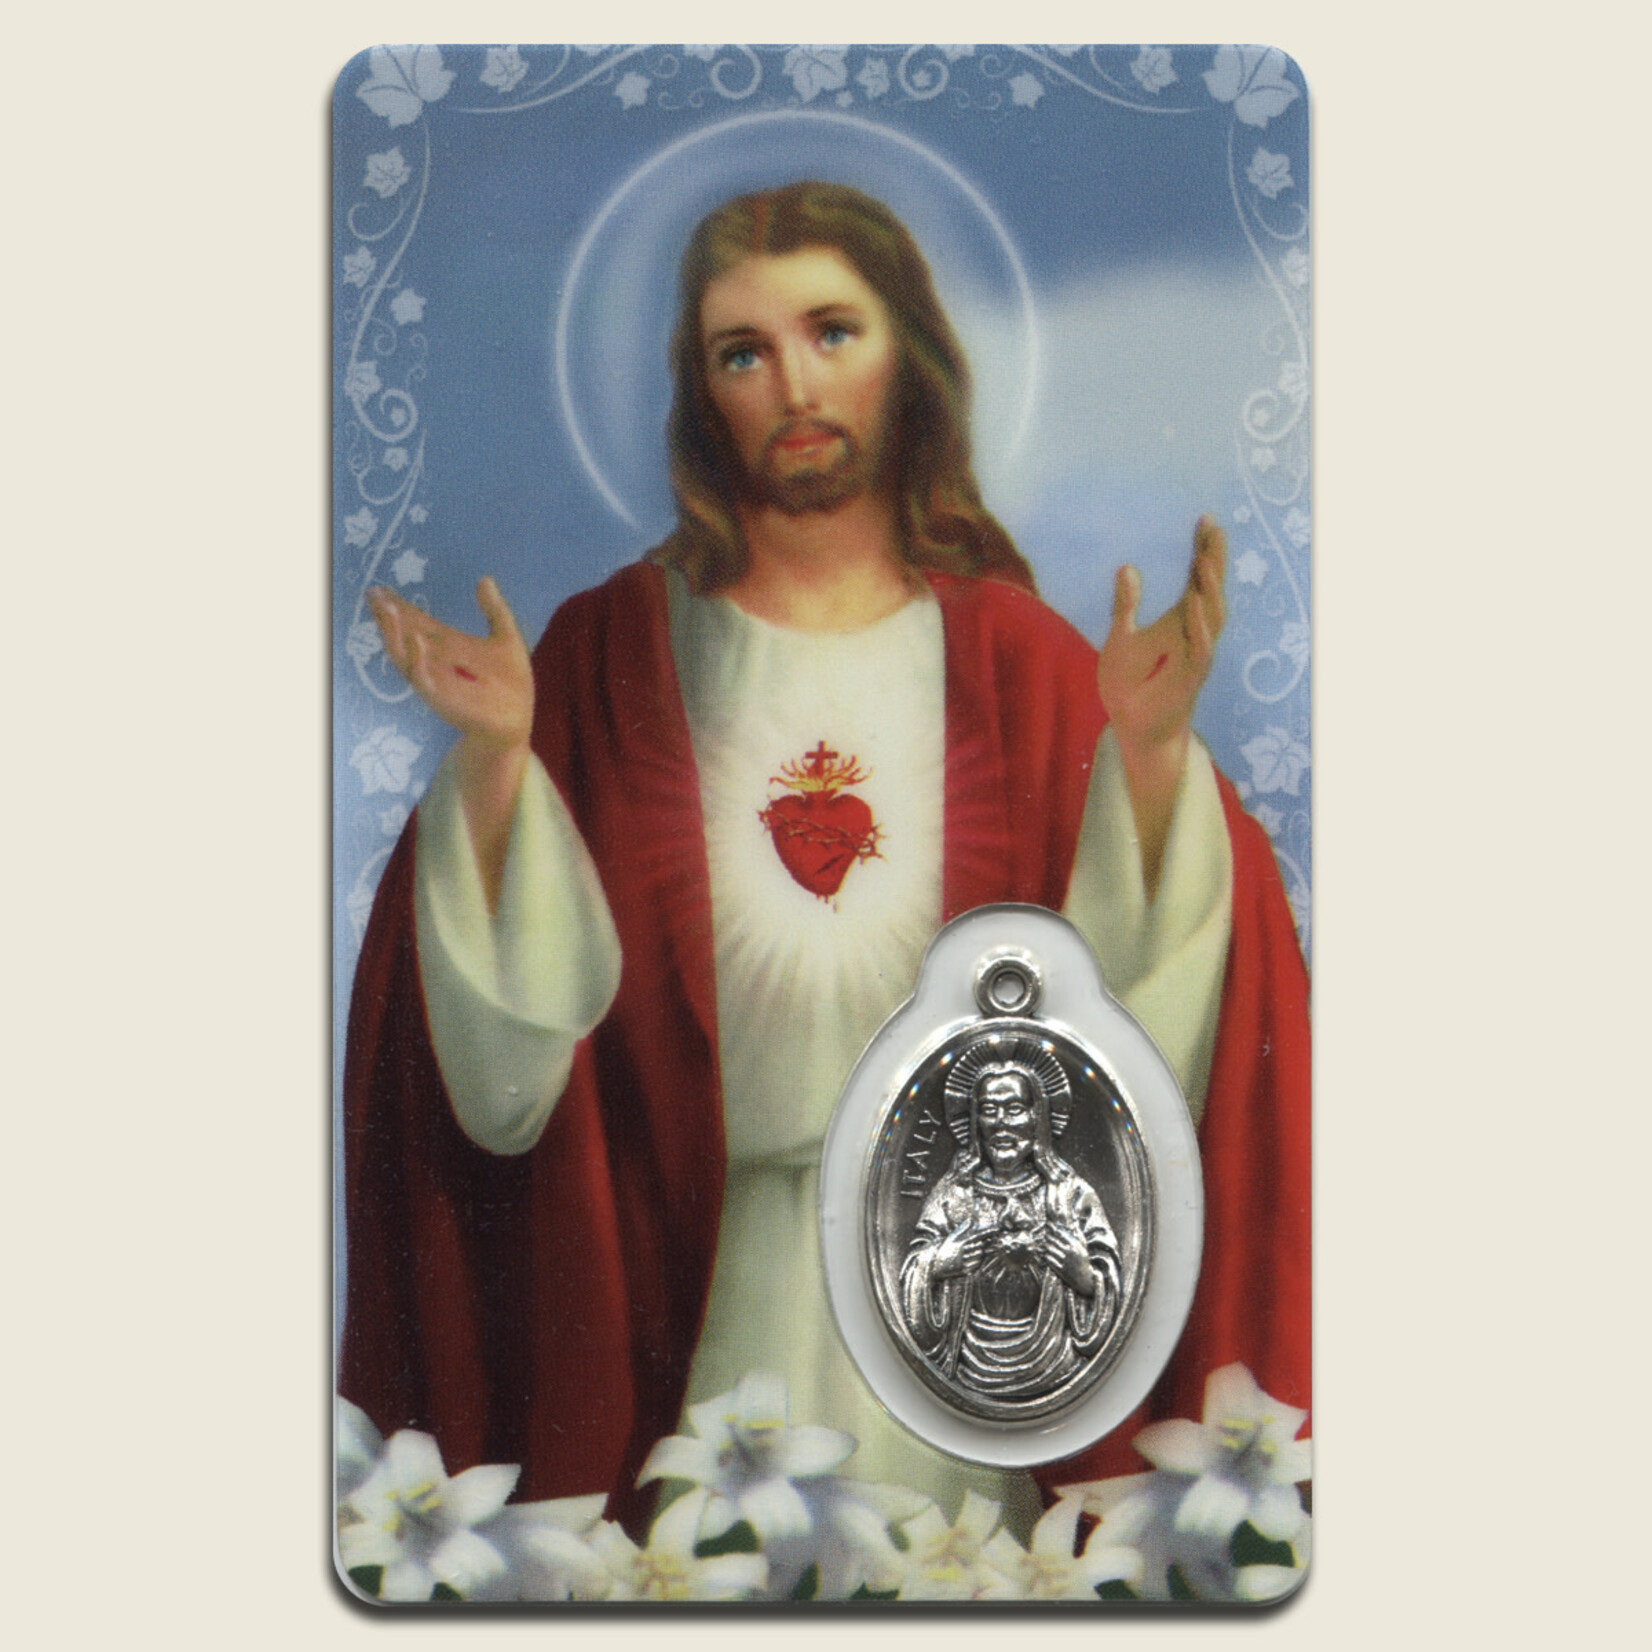 Sacred Heart Of Jesus Prayer Card